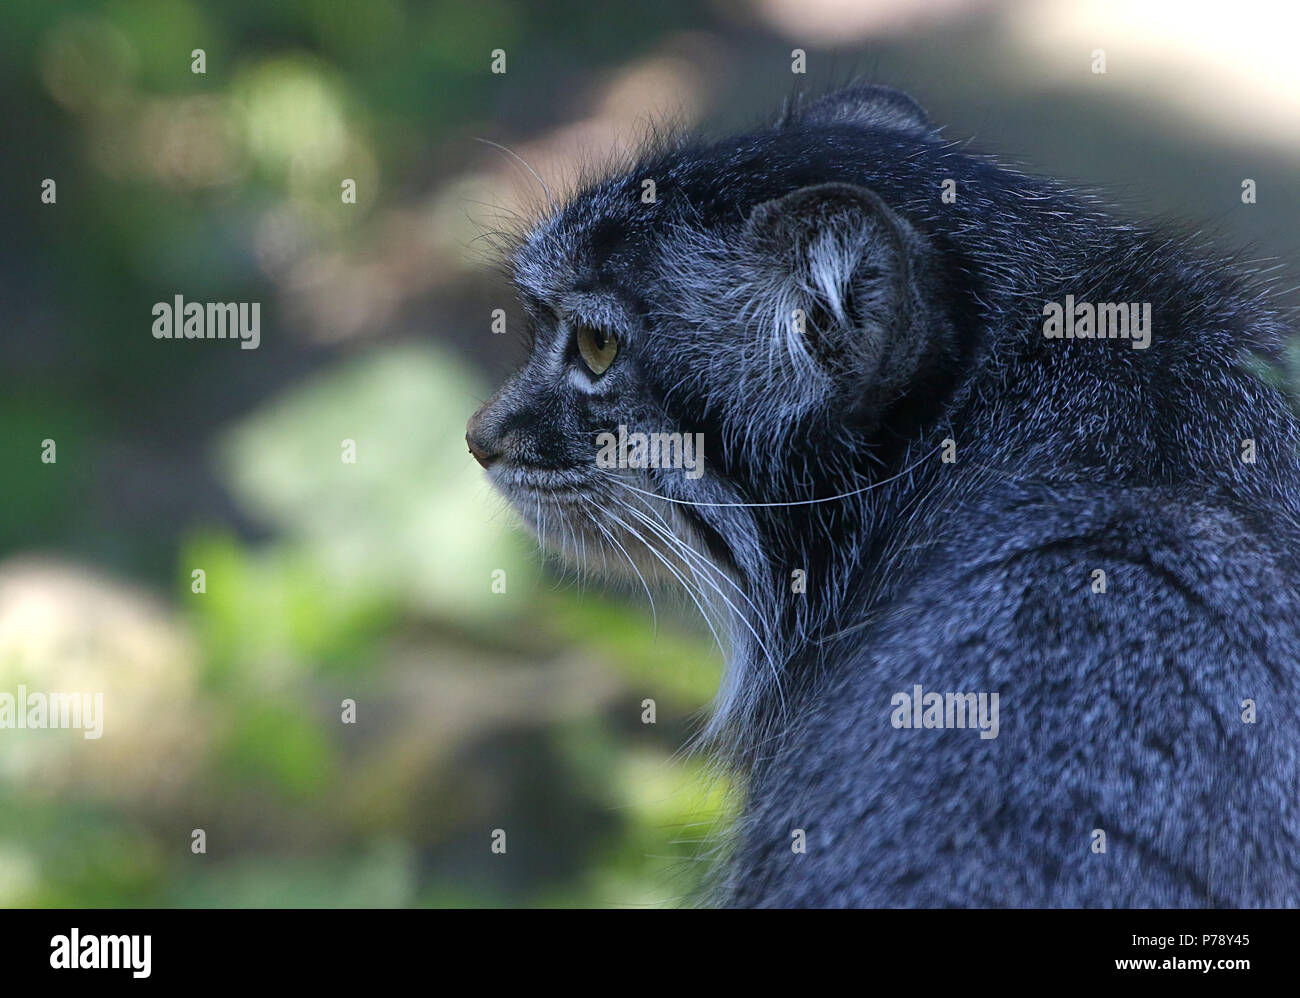 Central Asian Pallas's cat or manul cat (Otocolobus manul, Felis manul) in closeup Stock Photo